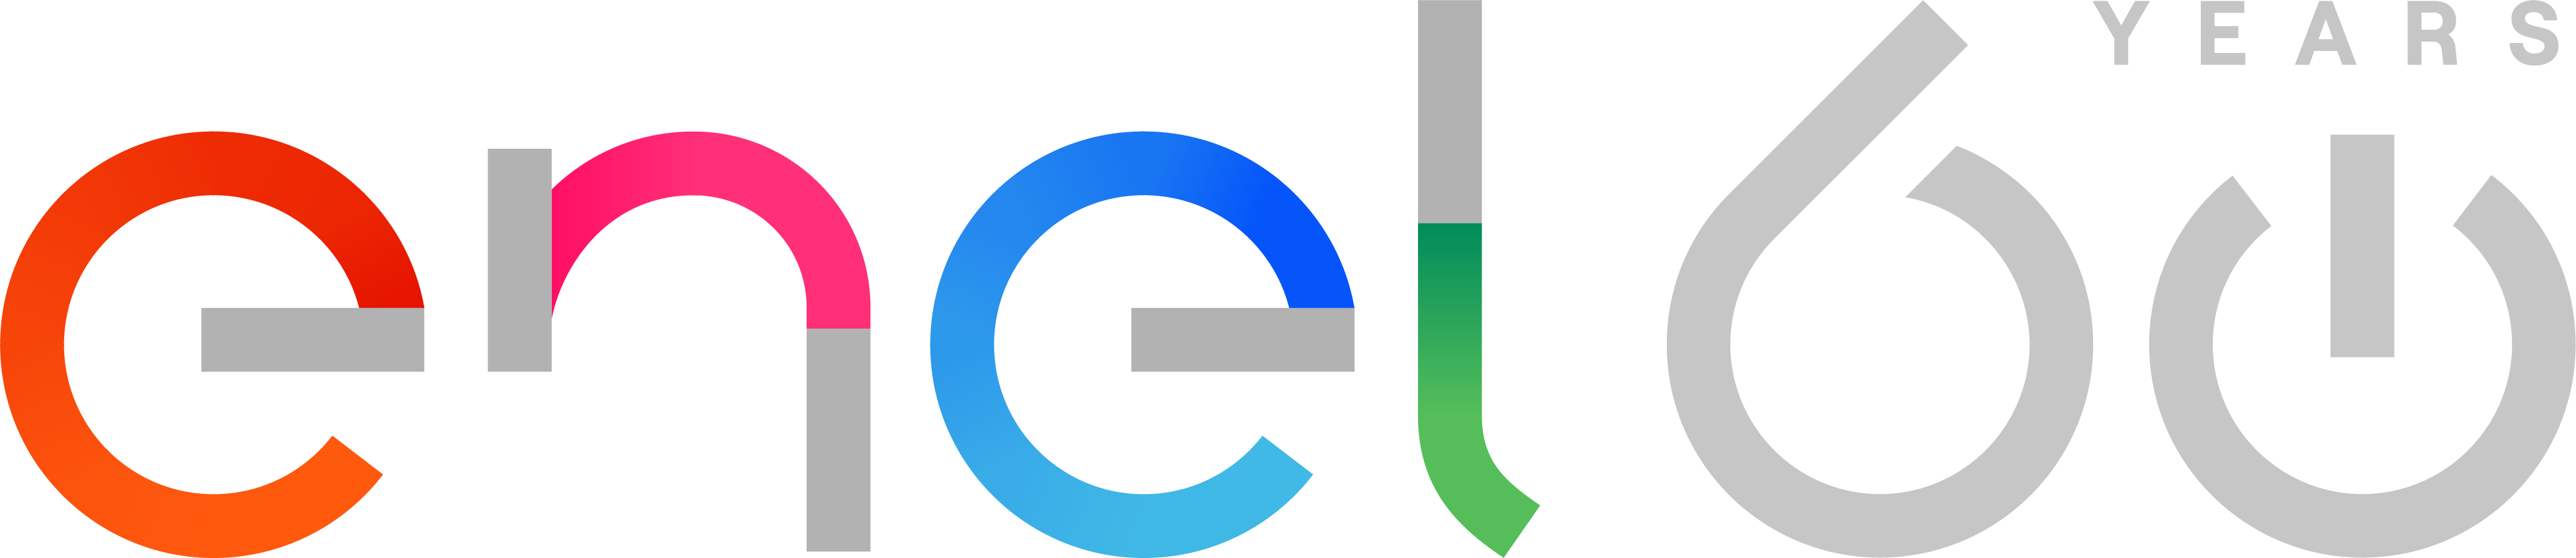 Enel  logo